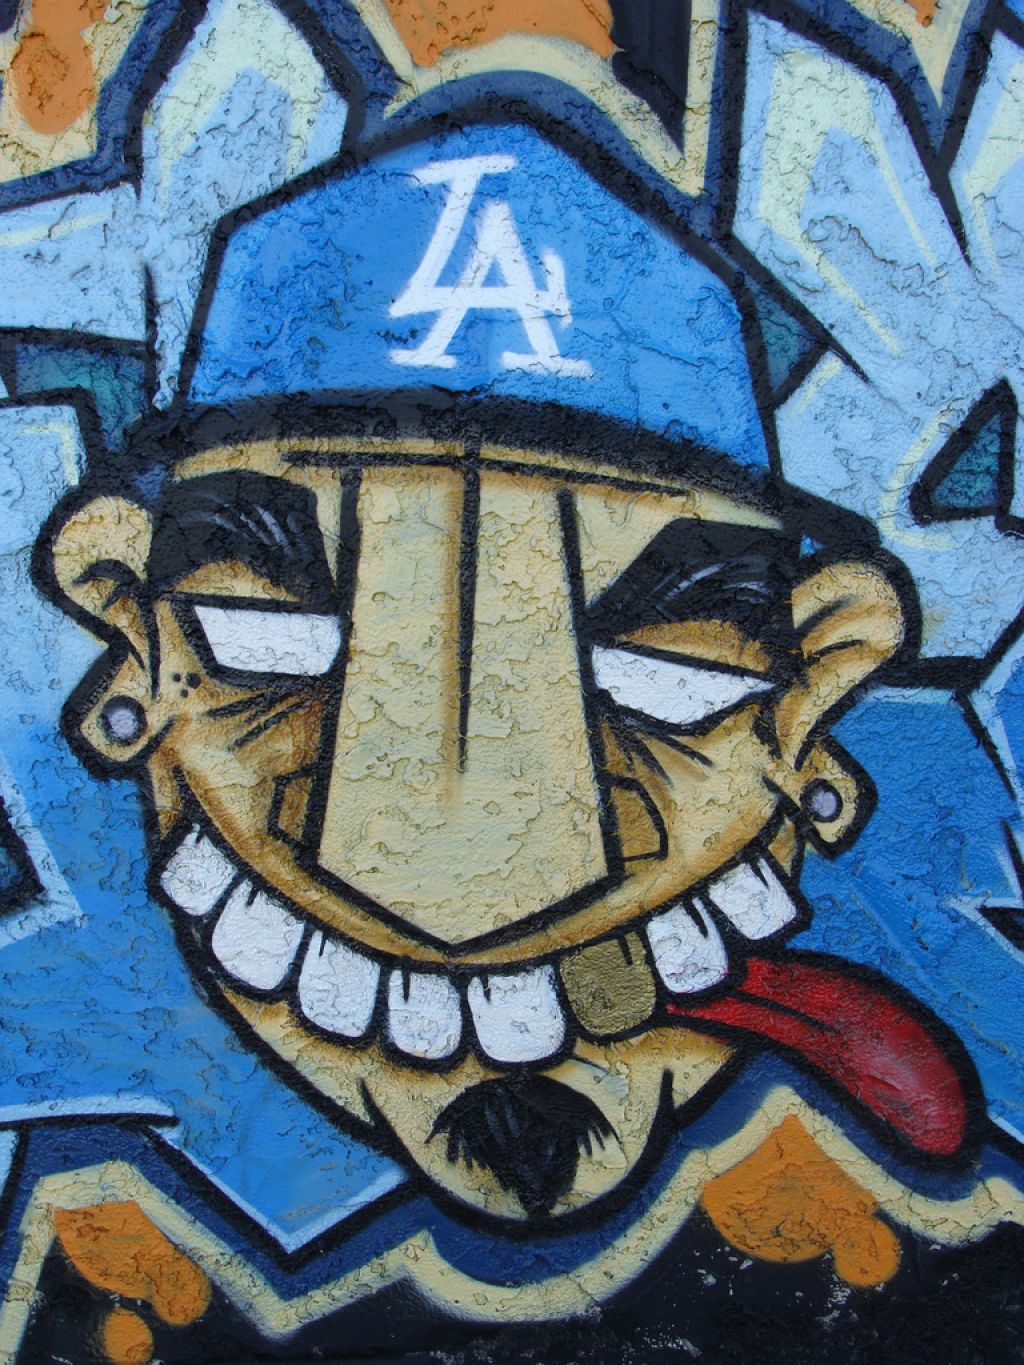 graffiti art2 Street Art and Graffiti in Los Angeles